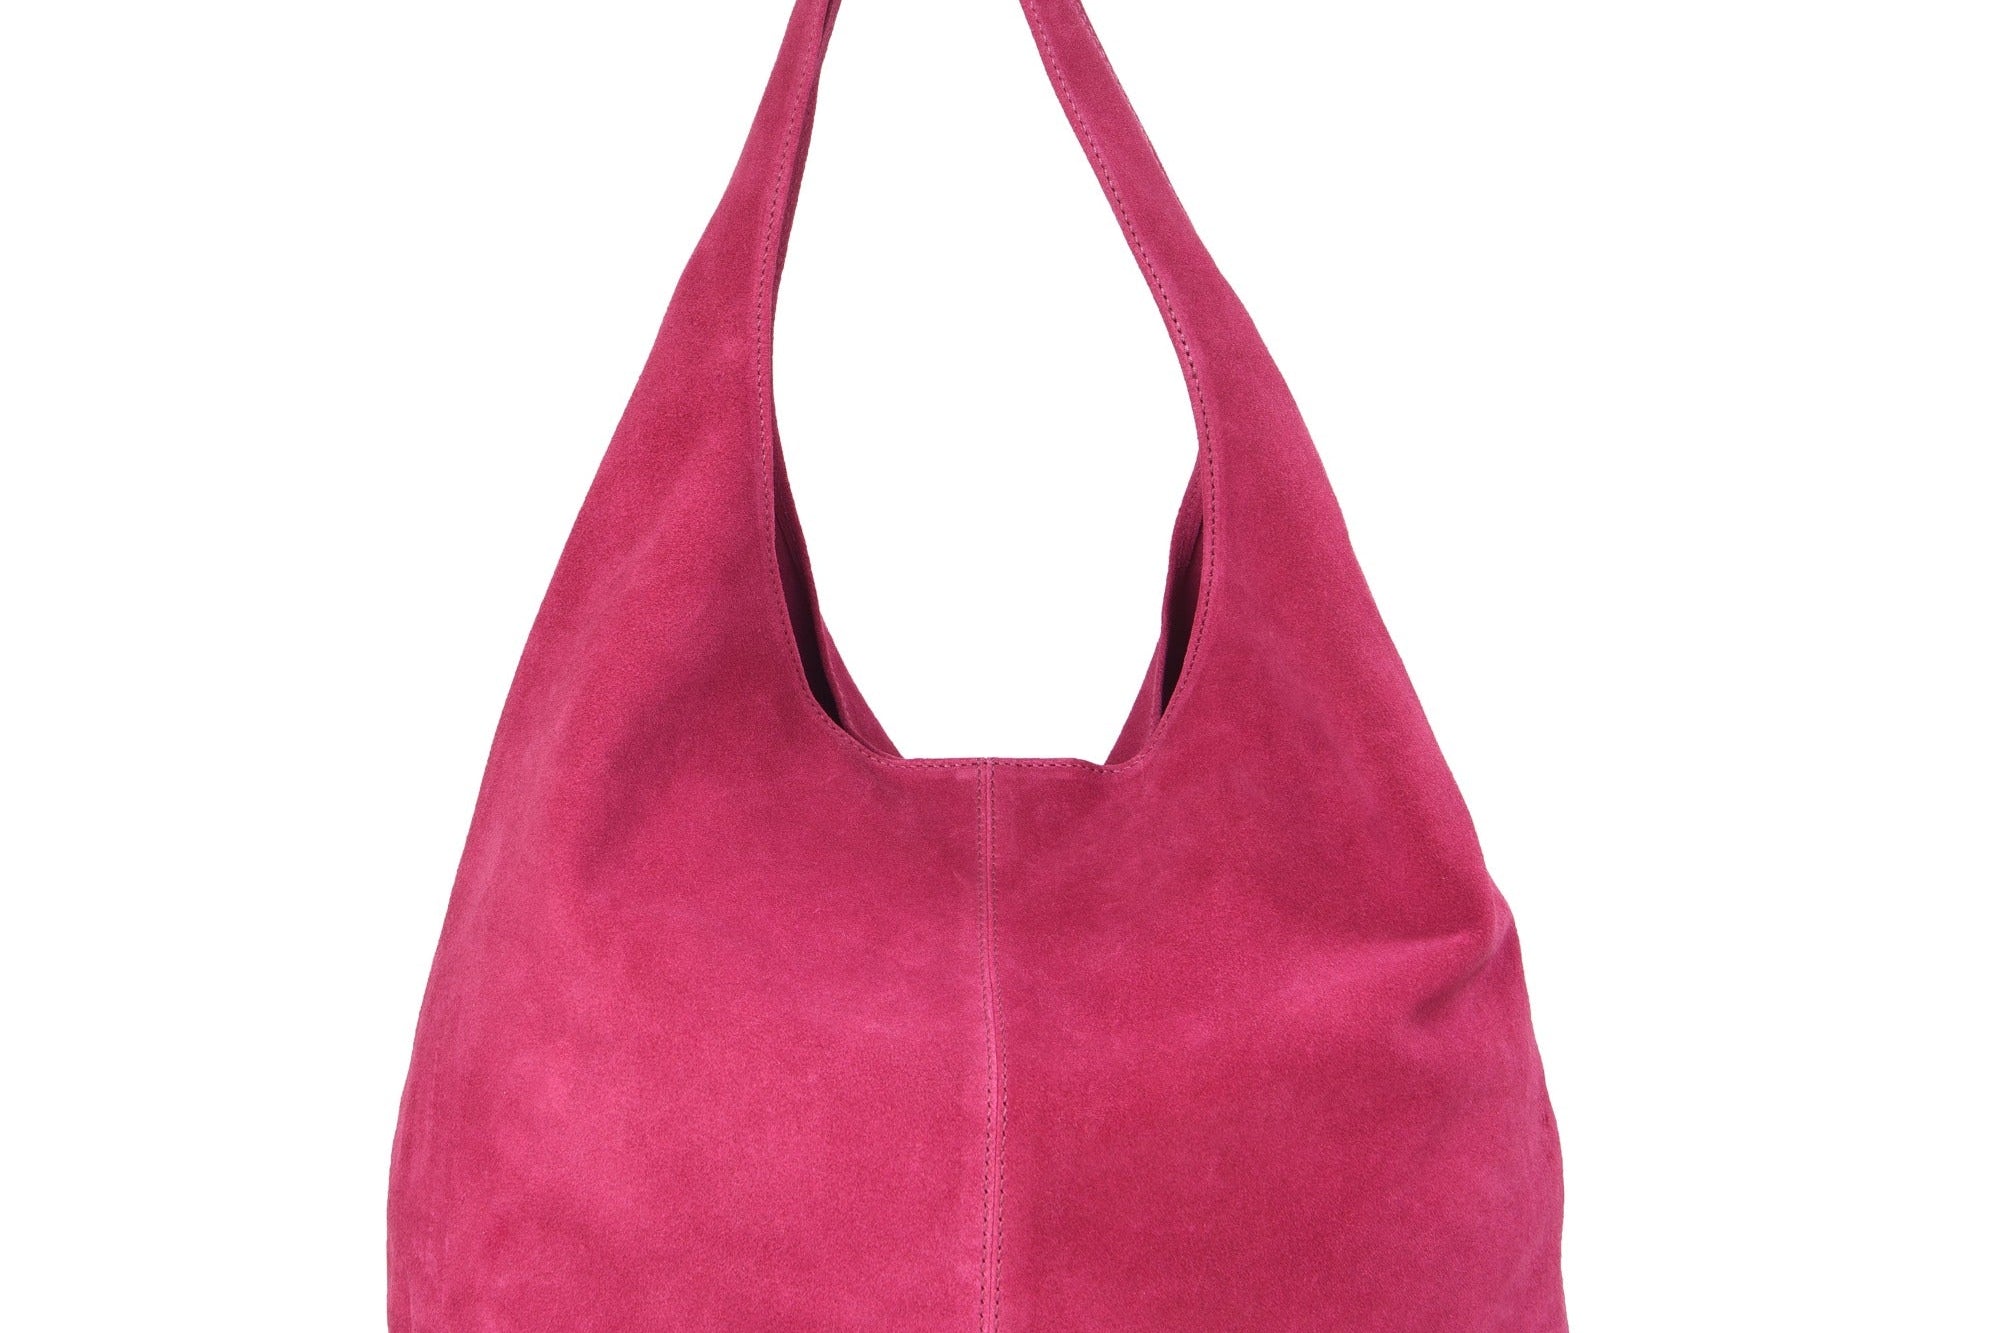 Raspberry Suede Leather Hobo Boho Shoulder Bag